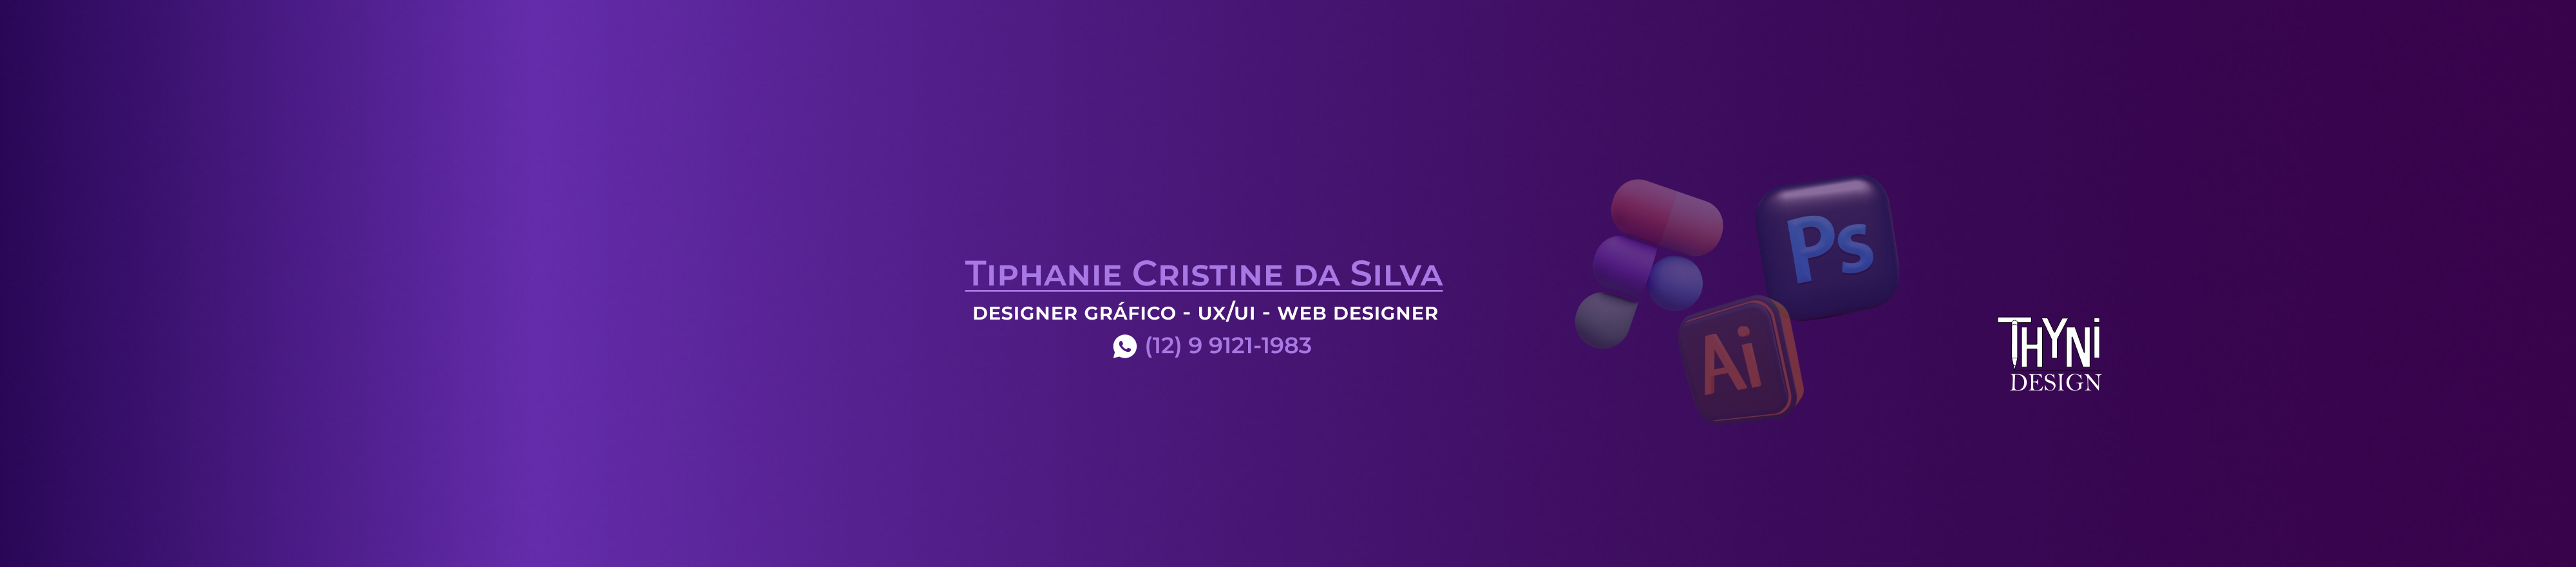 Tiphanie Cristine's profile banner